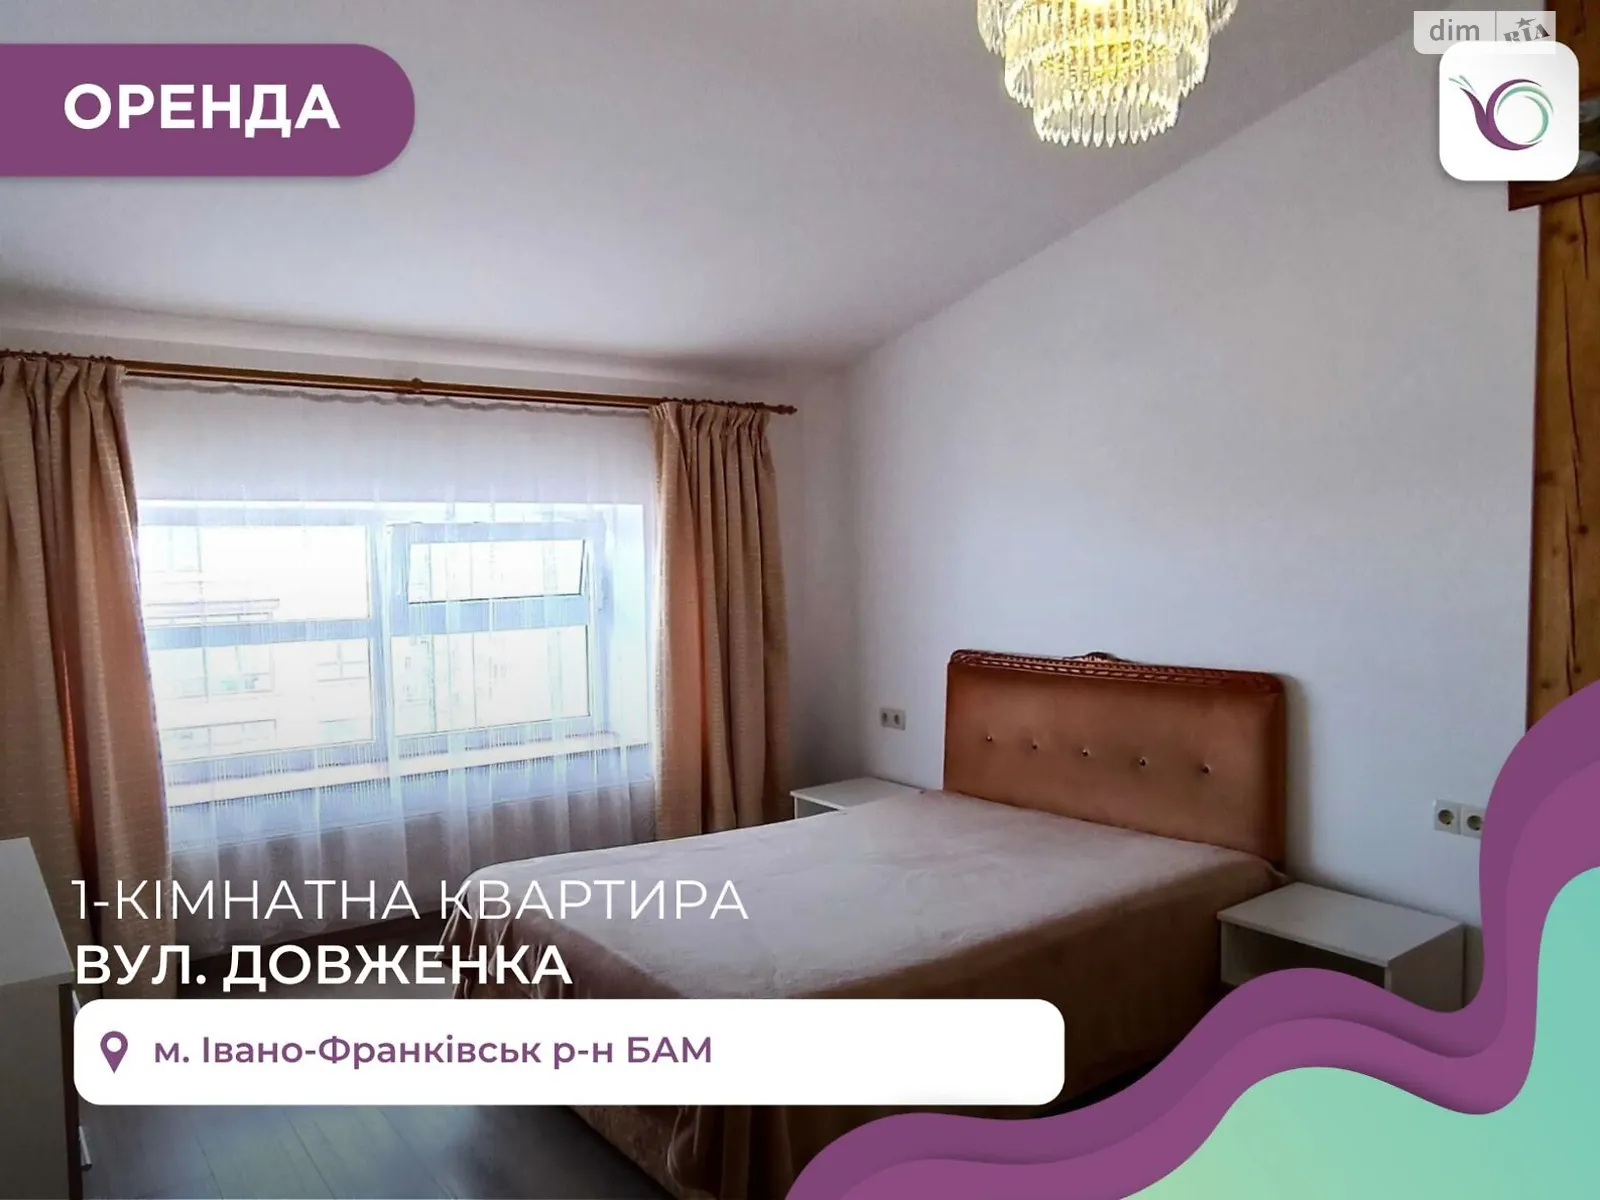 Сдается в аренду 1-комнатная квартира 41 кв. м в Ивано-Франковске, ул. Довженко А. - фото 1